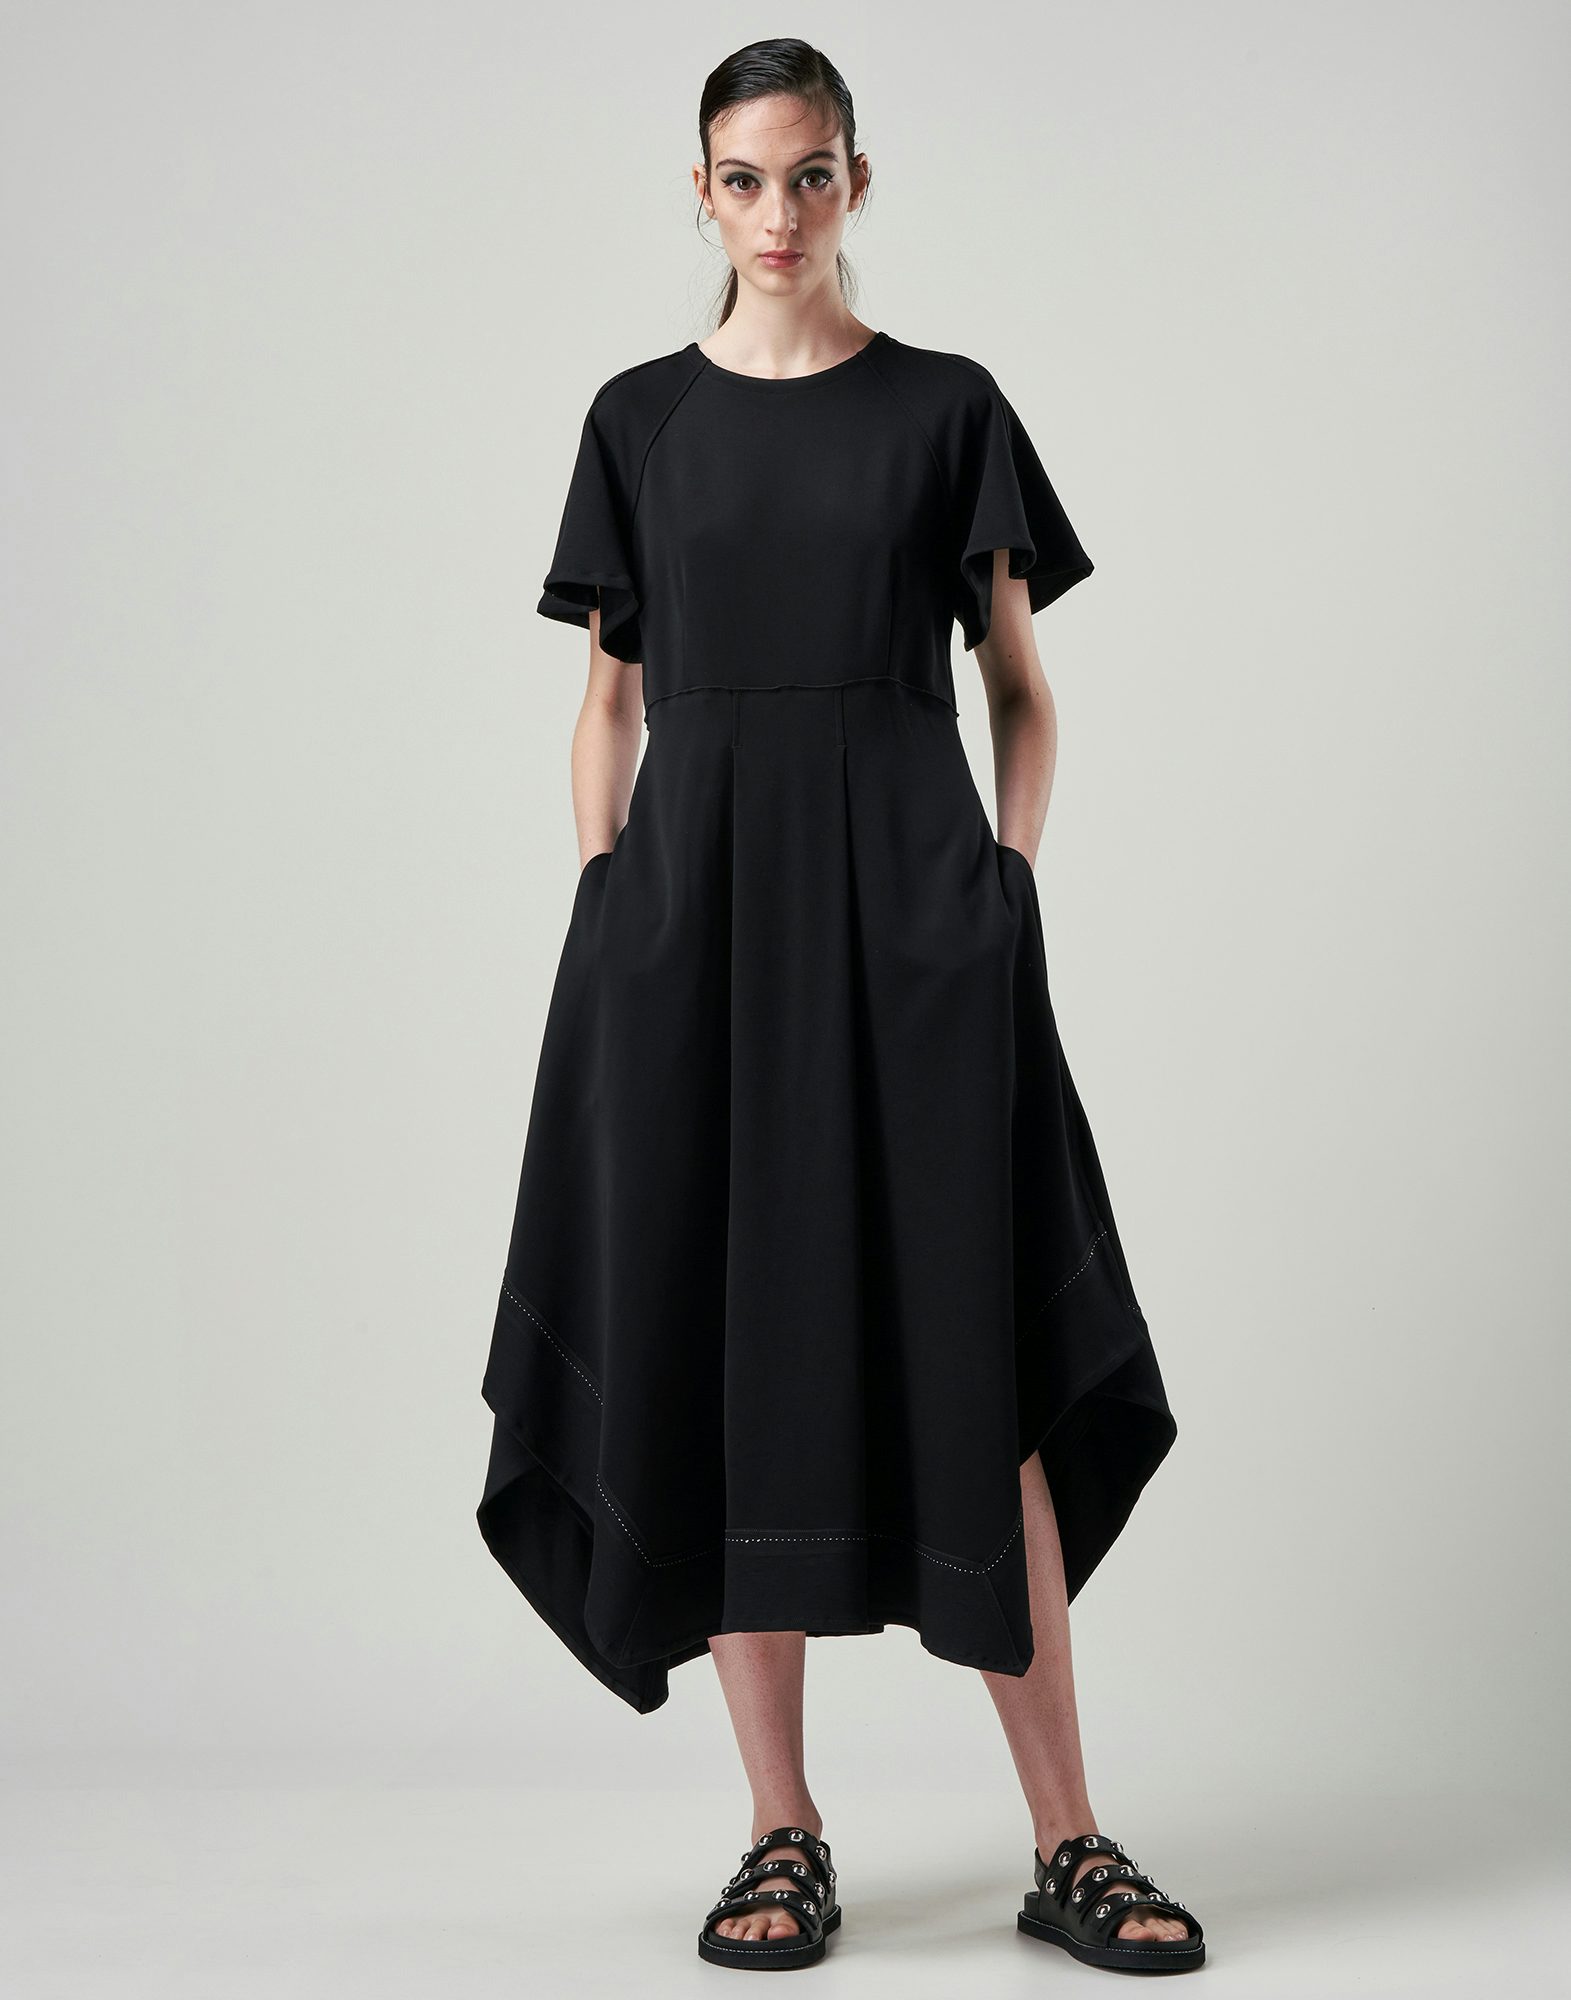 INSTINCT: Black dress with a multi-point skirt